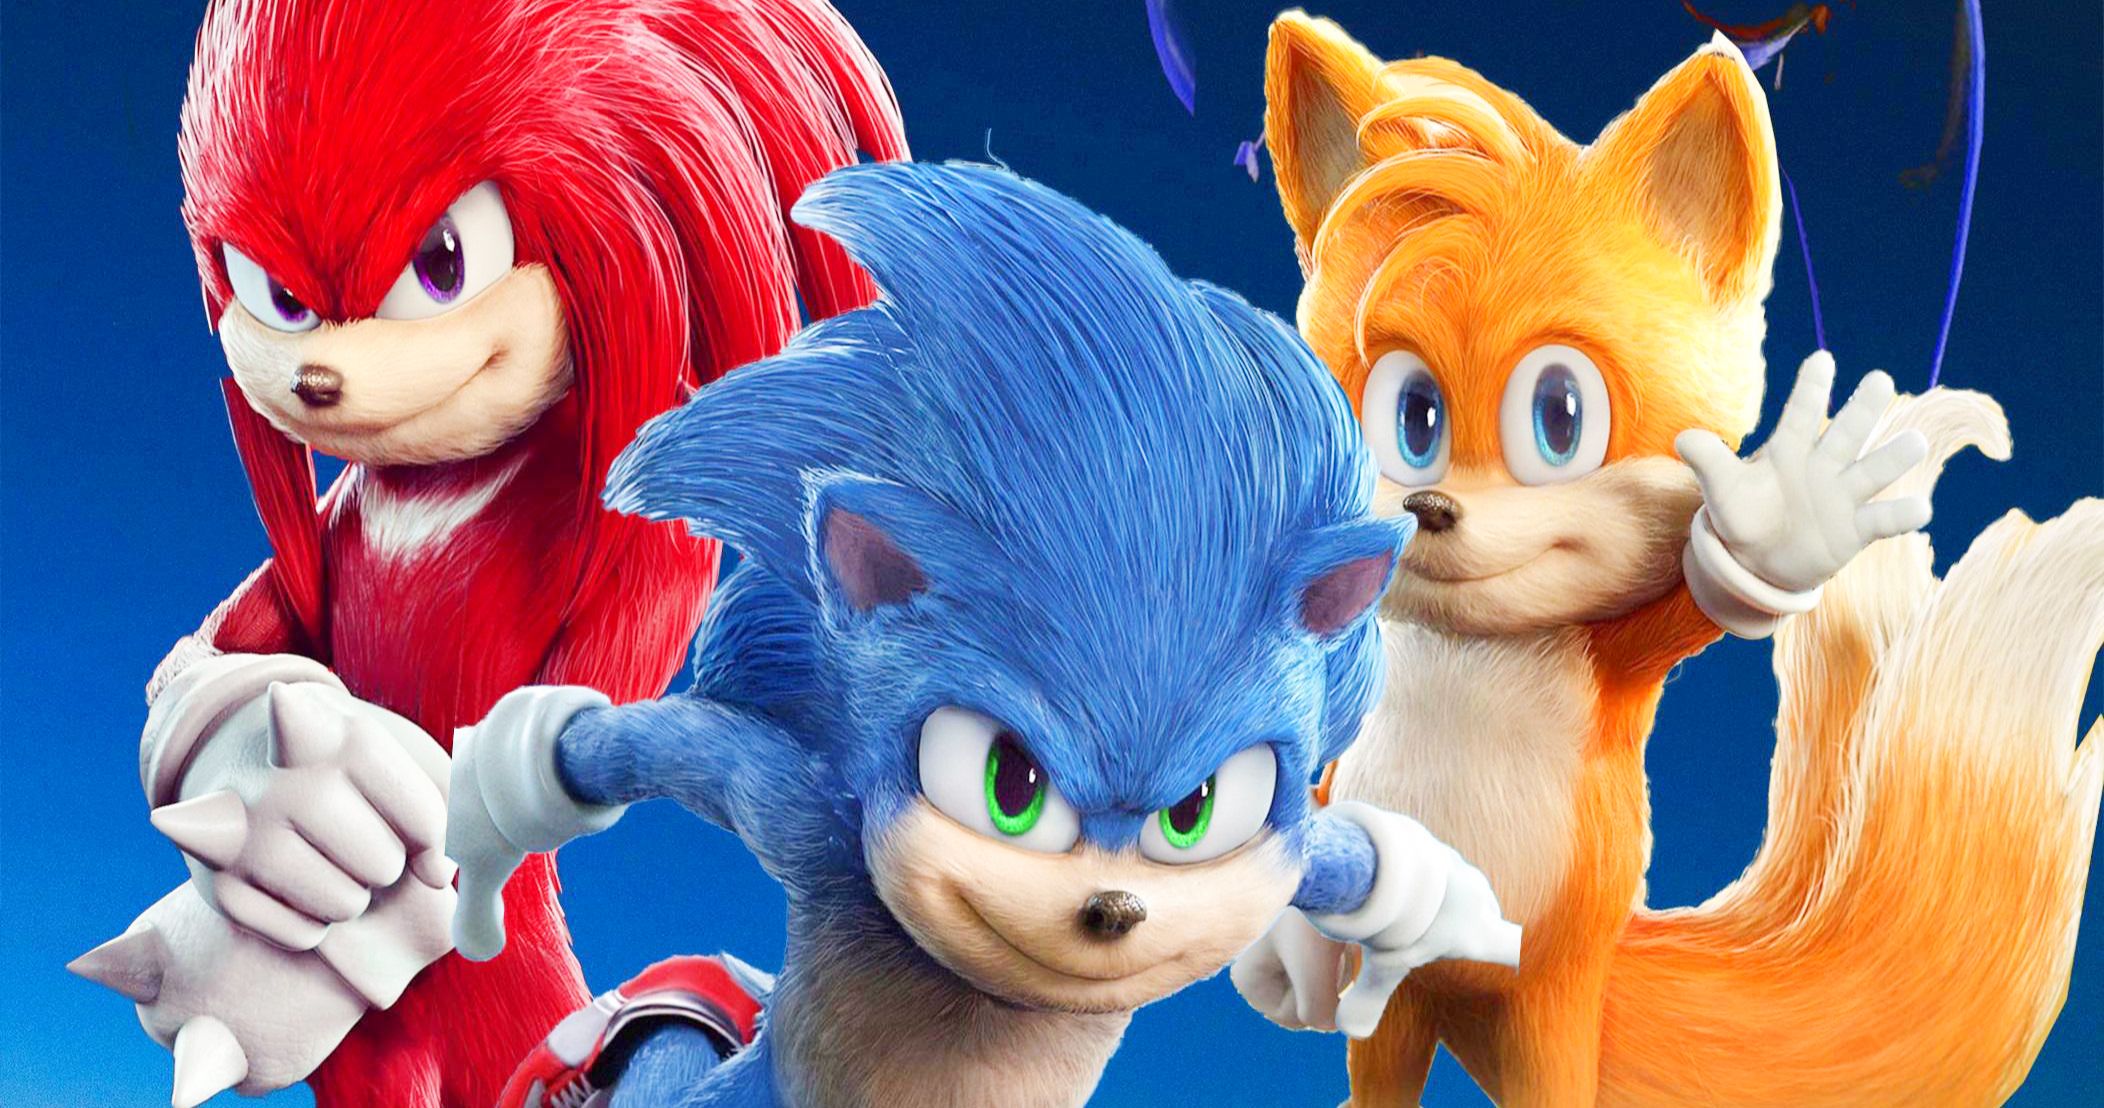 Sonic the Hedgehog 3 movie announced